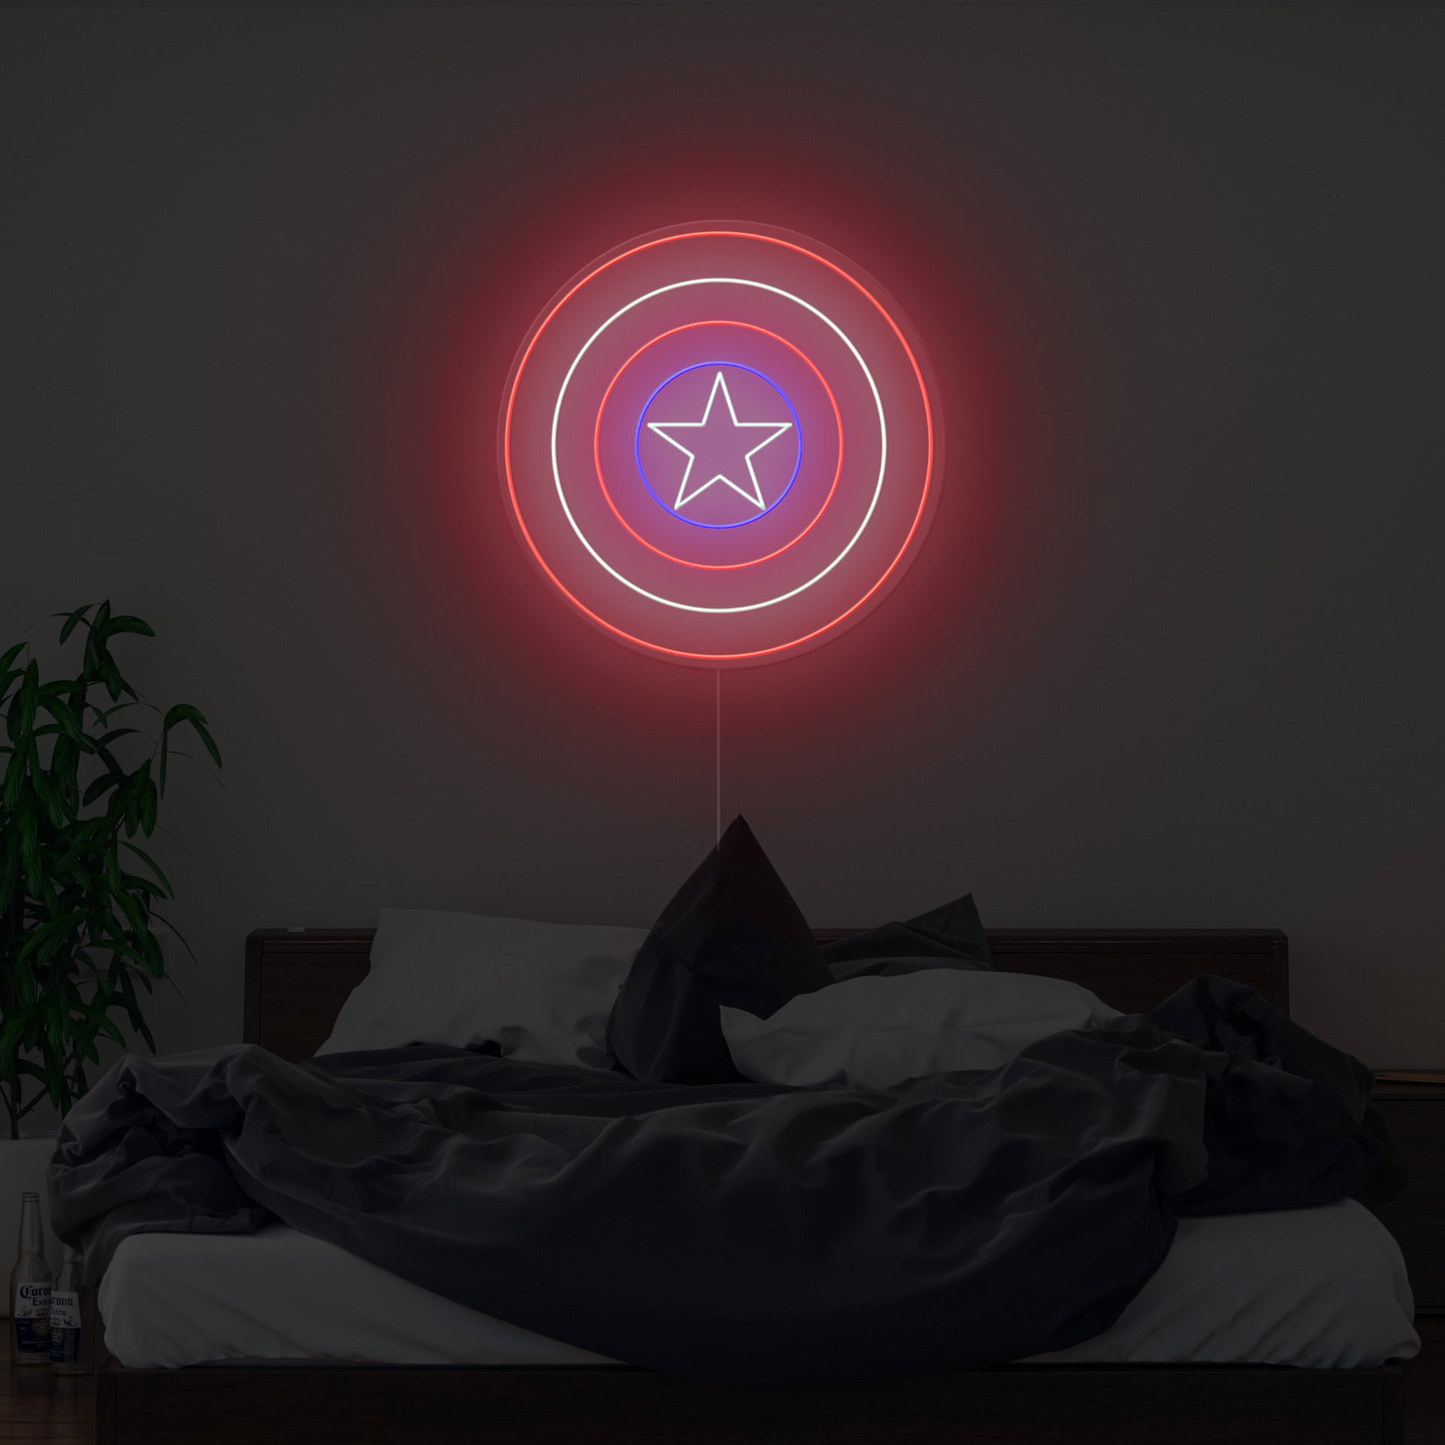 Captain Shield Neon Sign